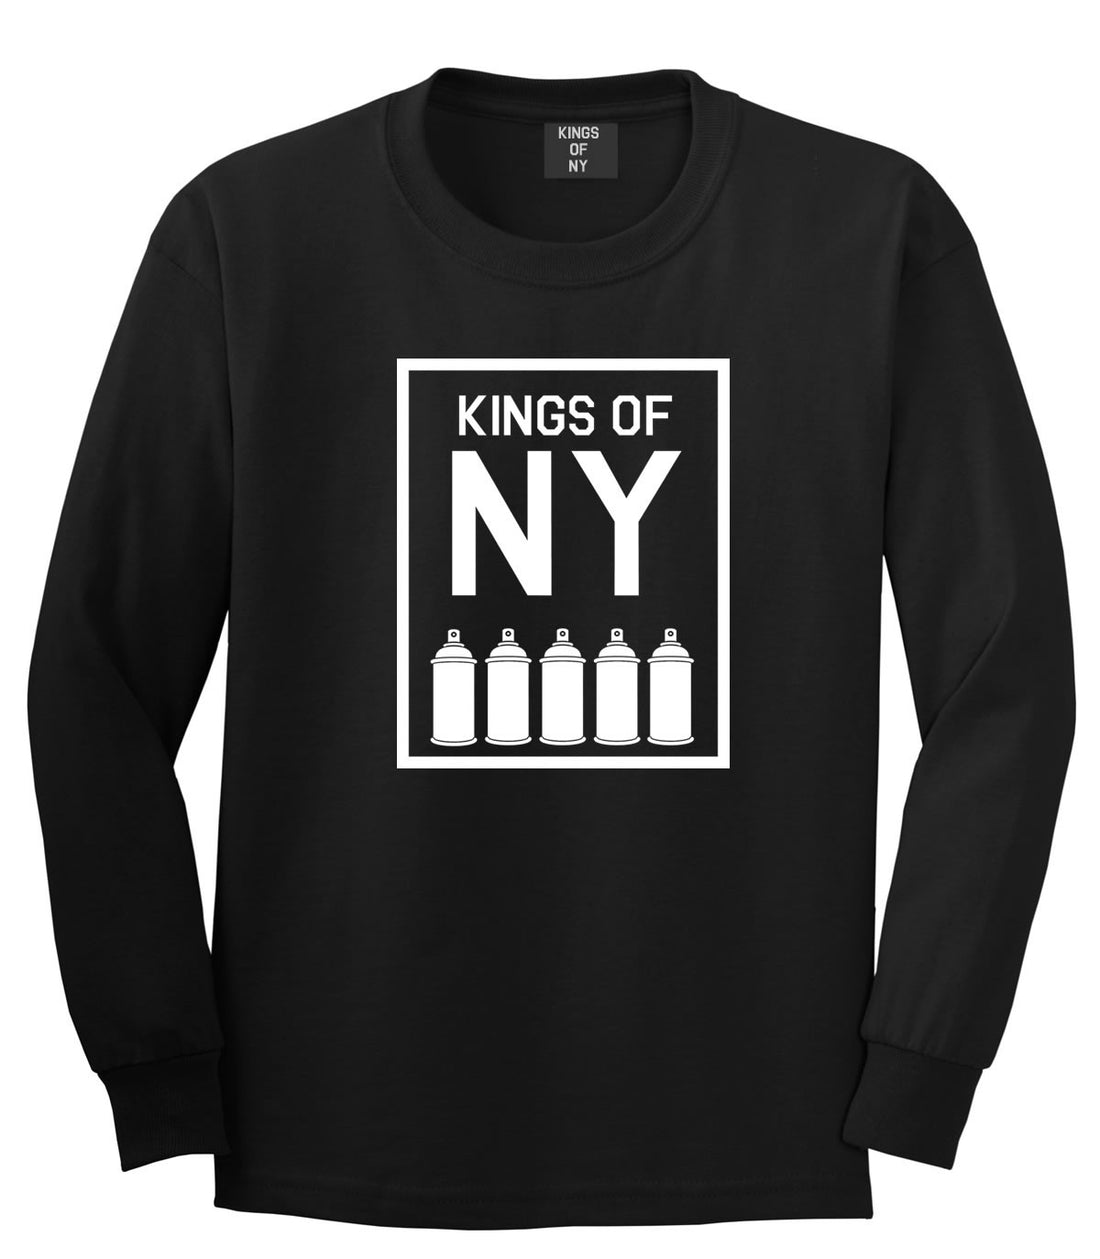 Spray Can Graffiti Long Sleeve T-Shirt in Black by Kings Of NY